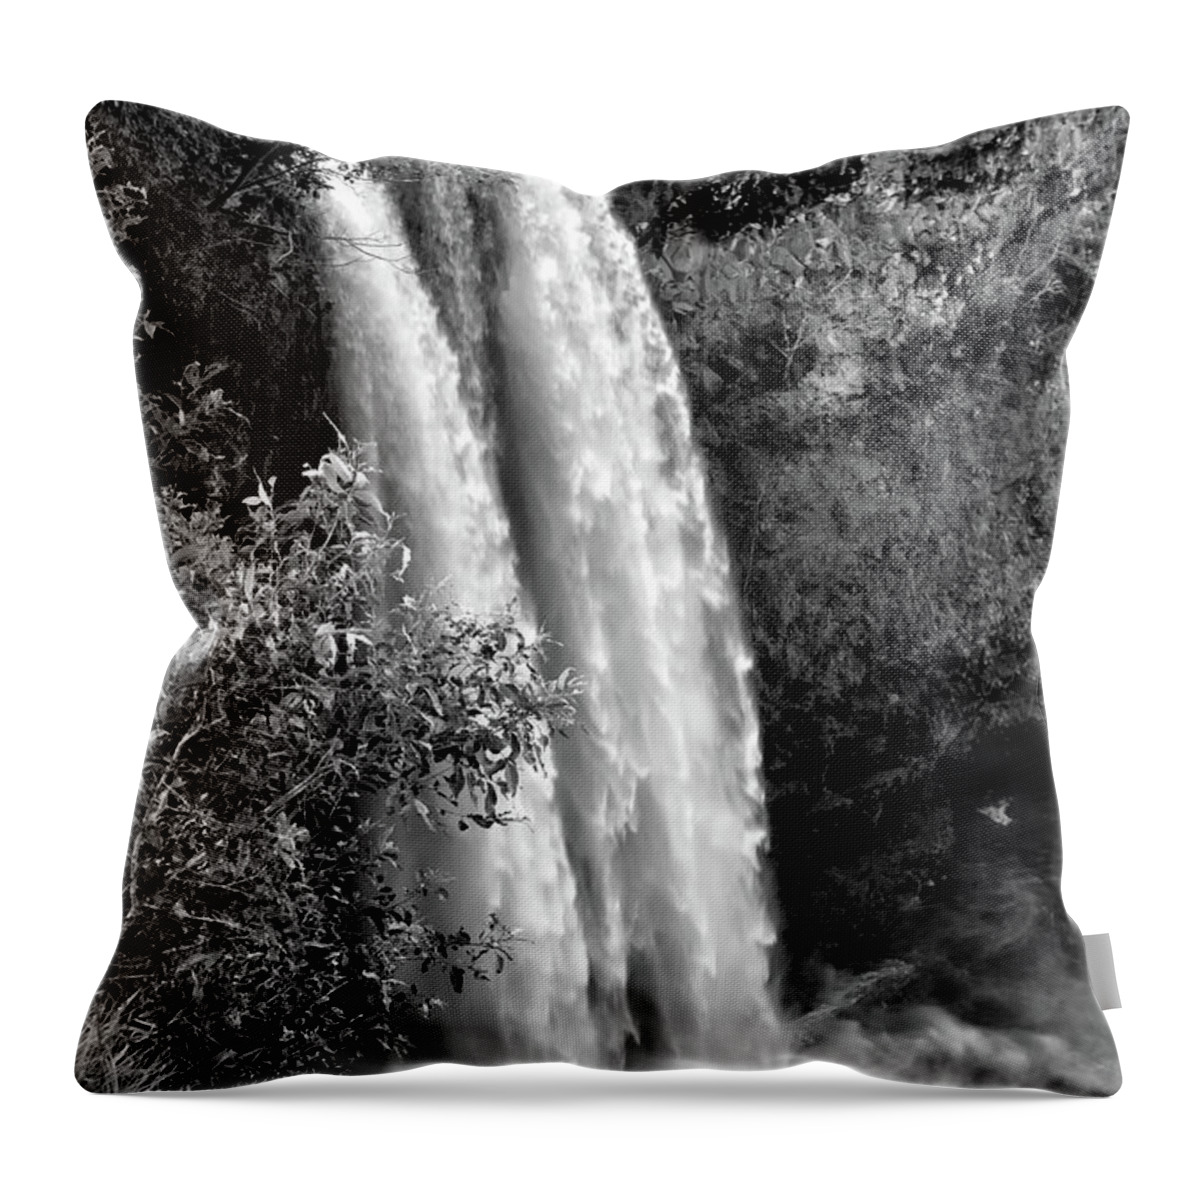 Wailua Falls Throw Pillow featuring the photograph Wailua Falls by Jason Wolters